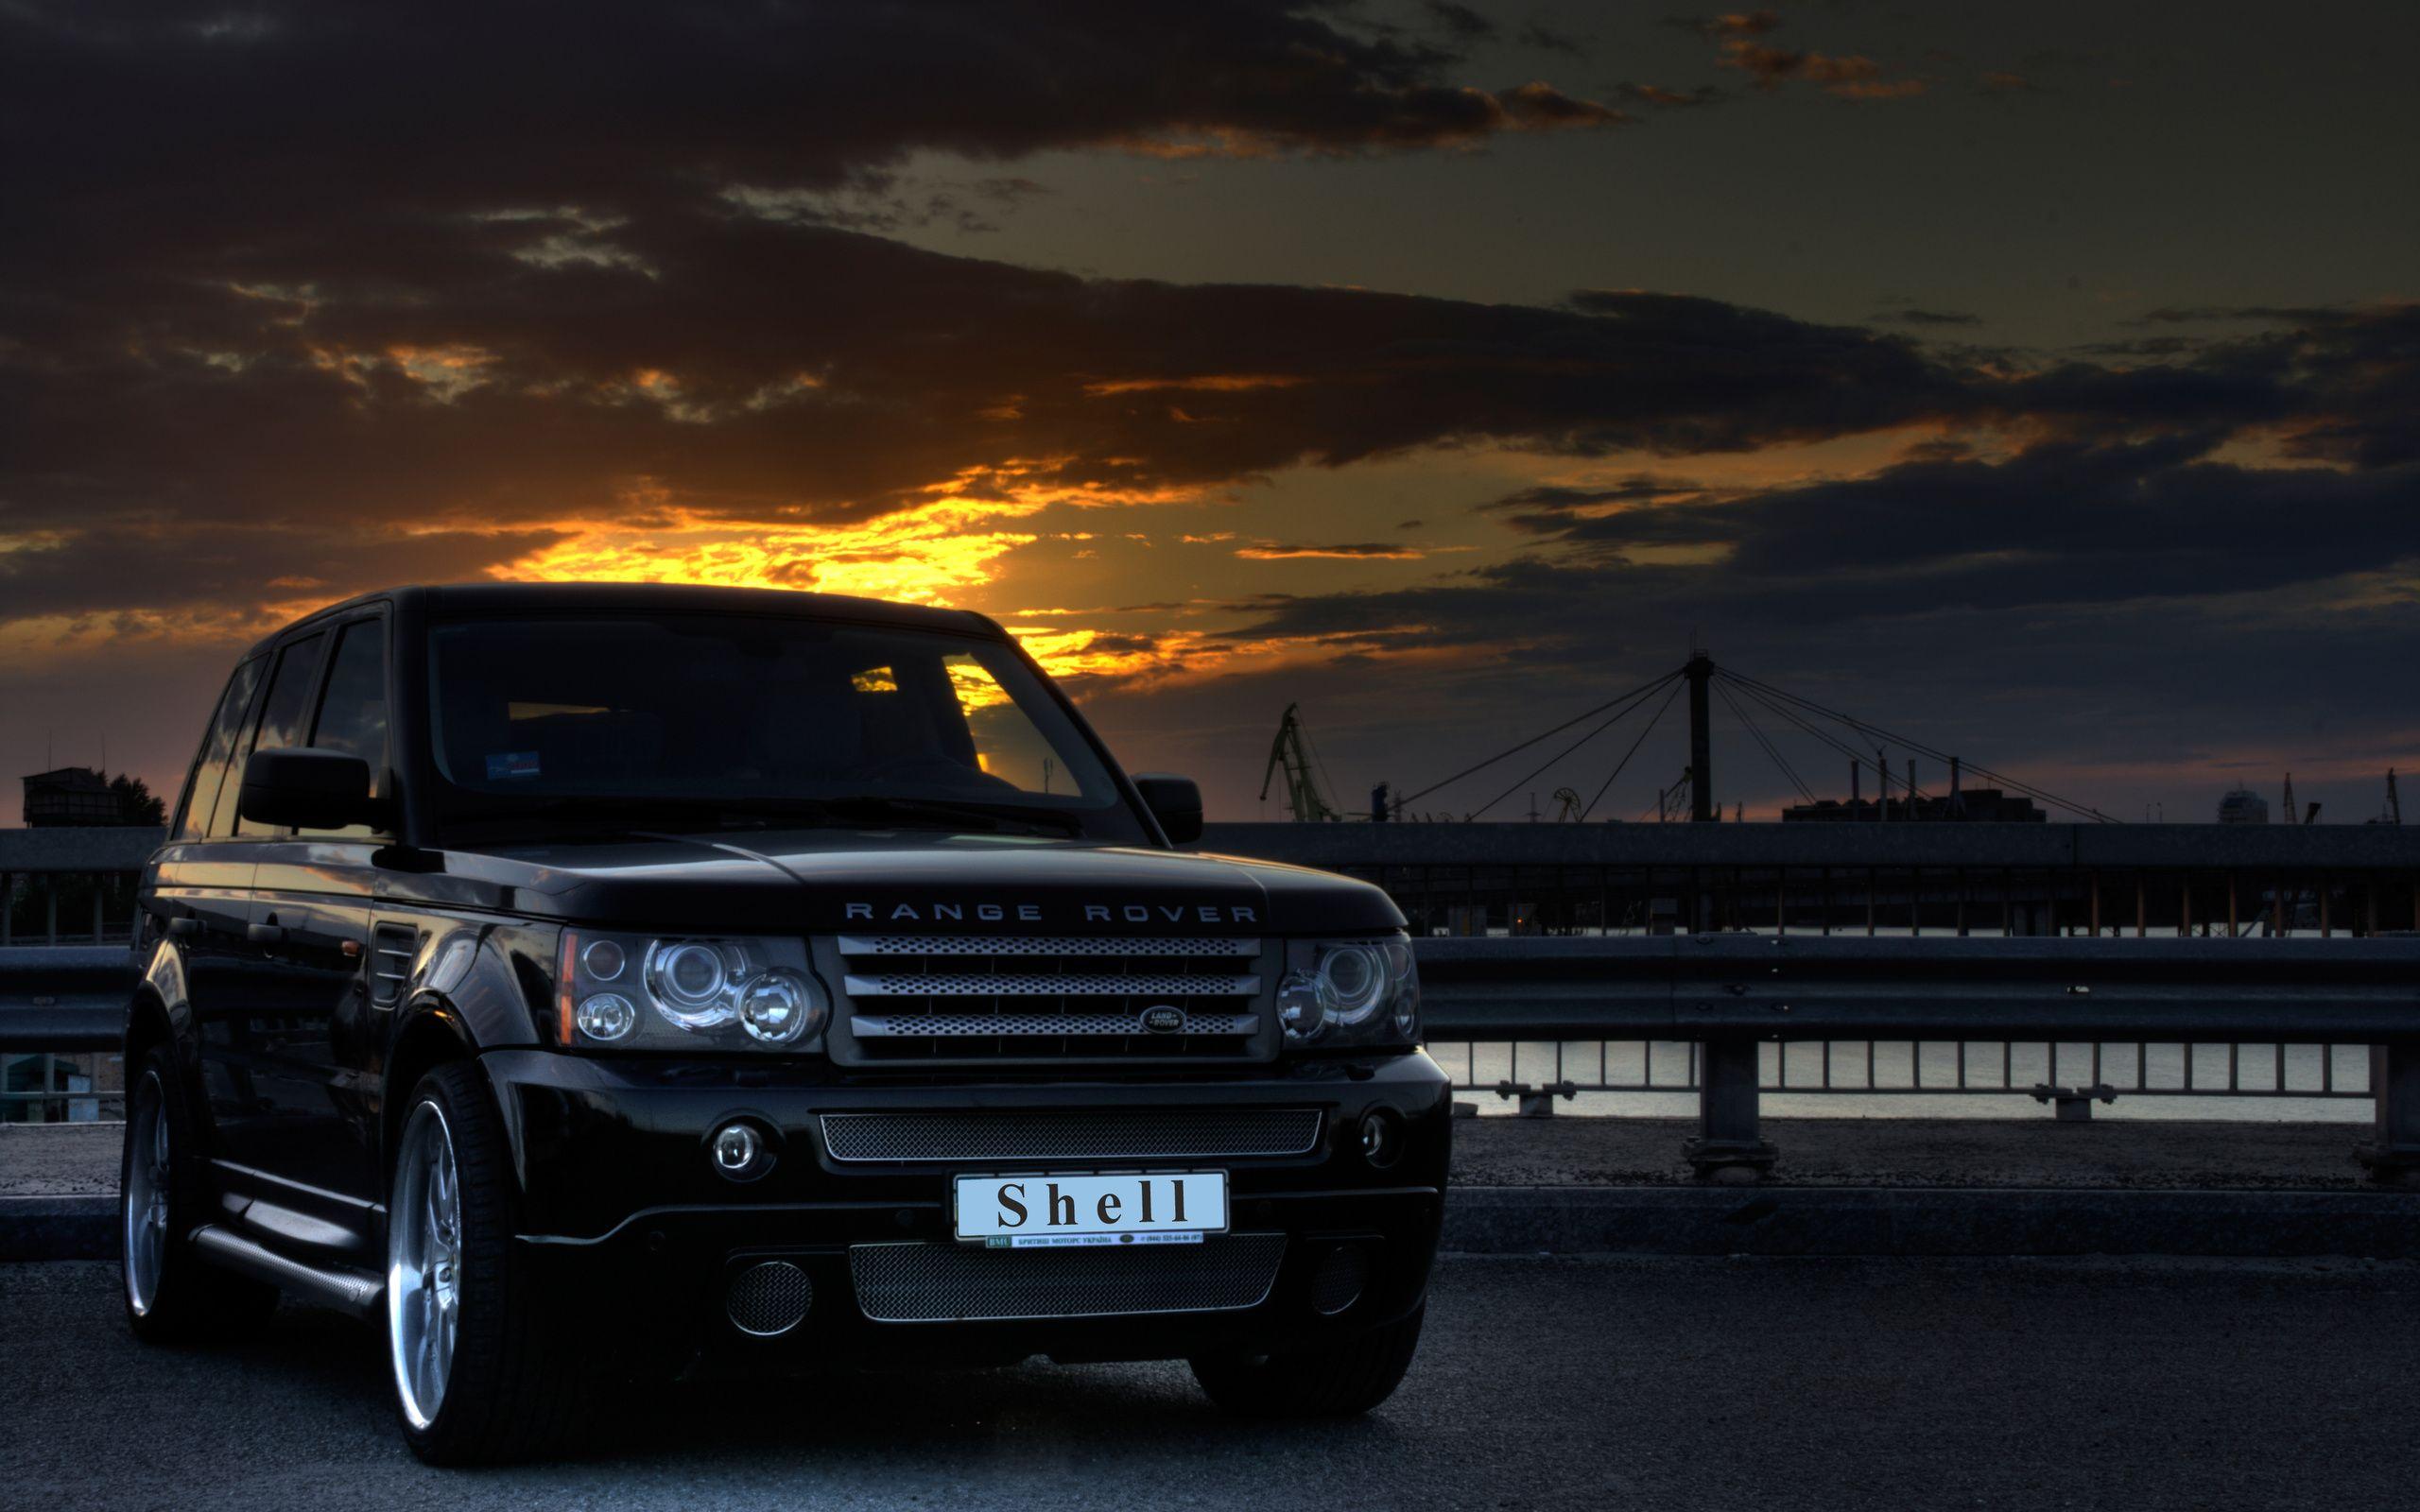 Black Range Rover Wallpapers - Top Free Black Range Rover Backgrounds